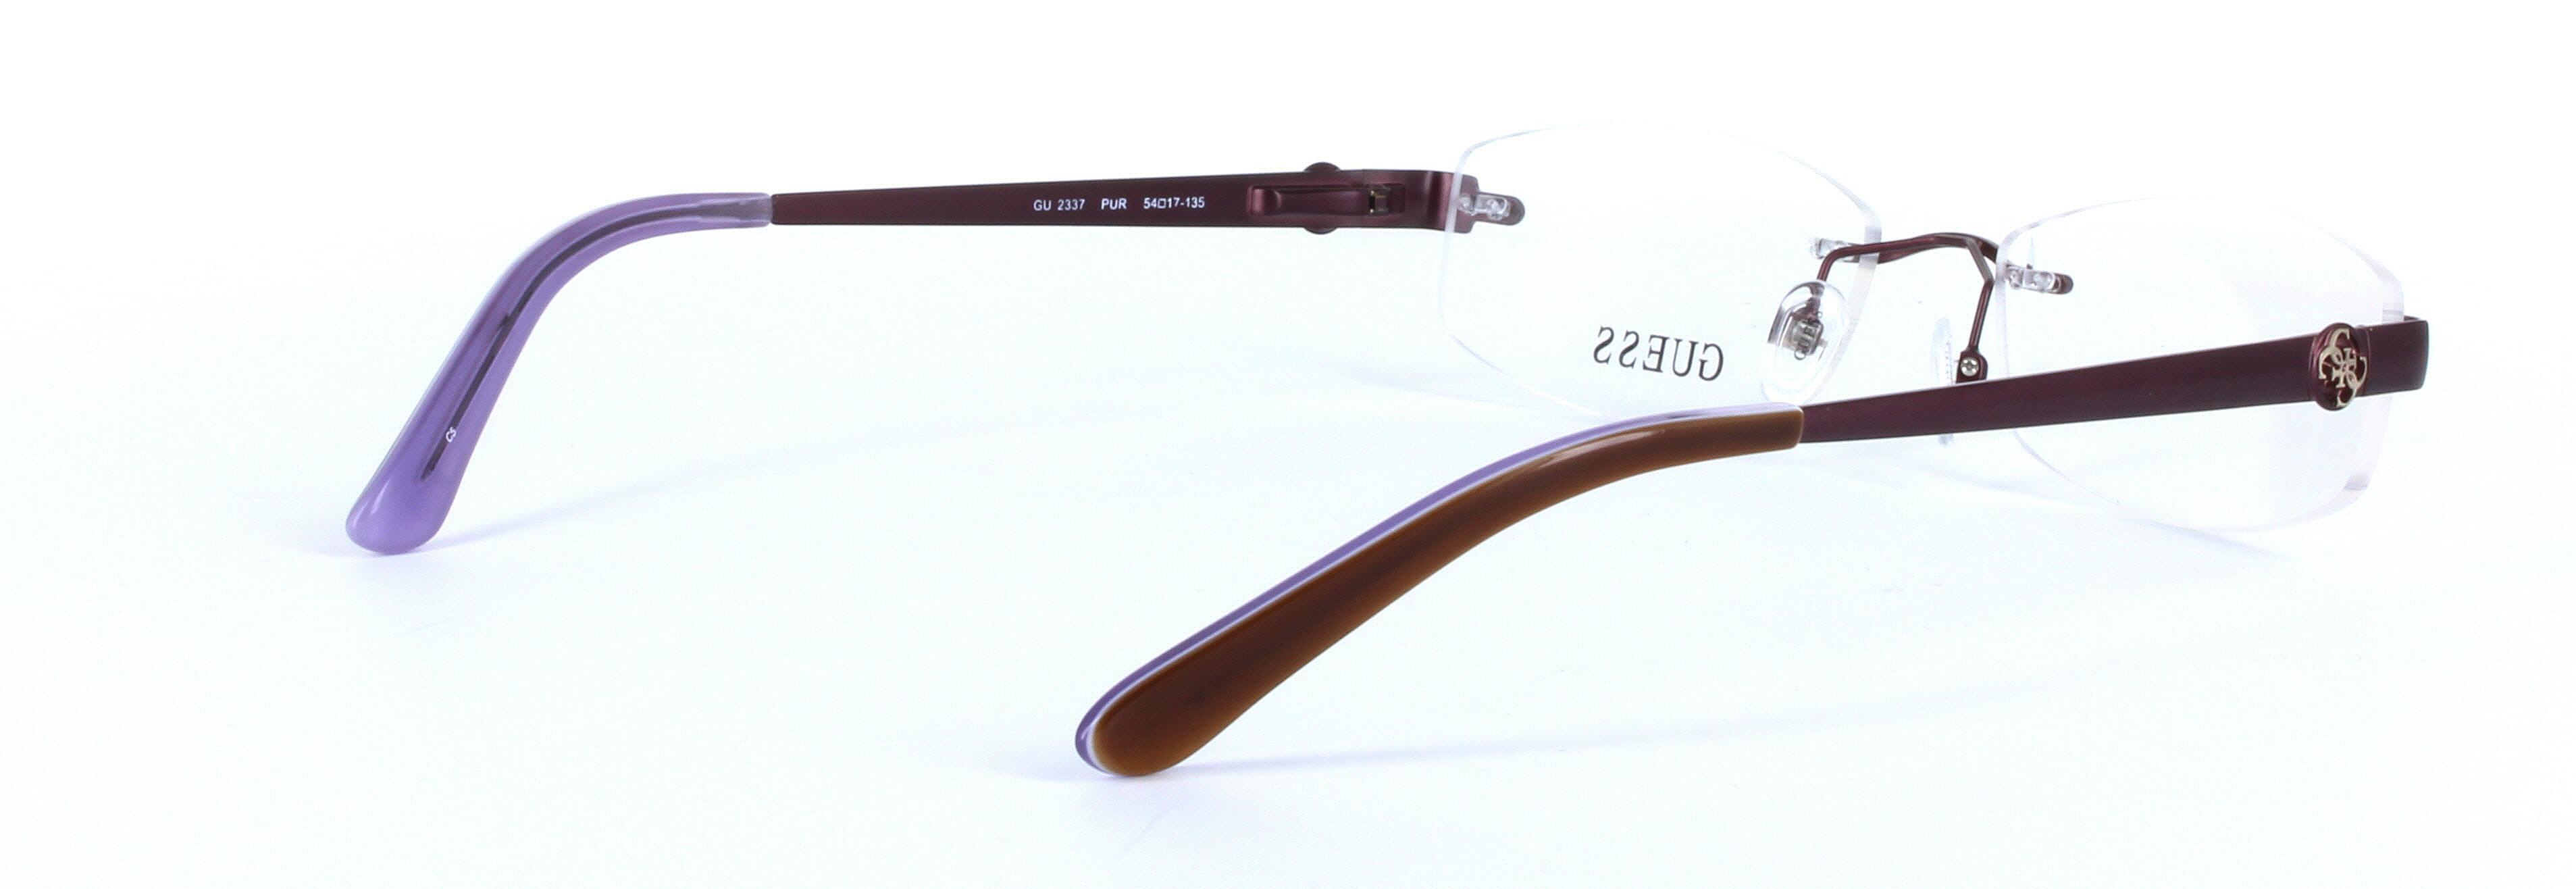 GUESS (GU2337-PUR) Purple Rimless Oval Rectangular Metal Glasses - Image View 4